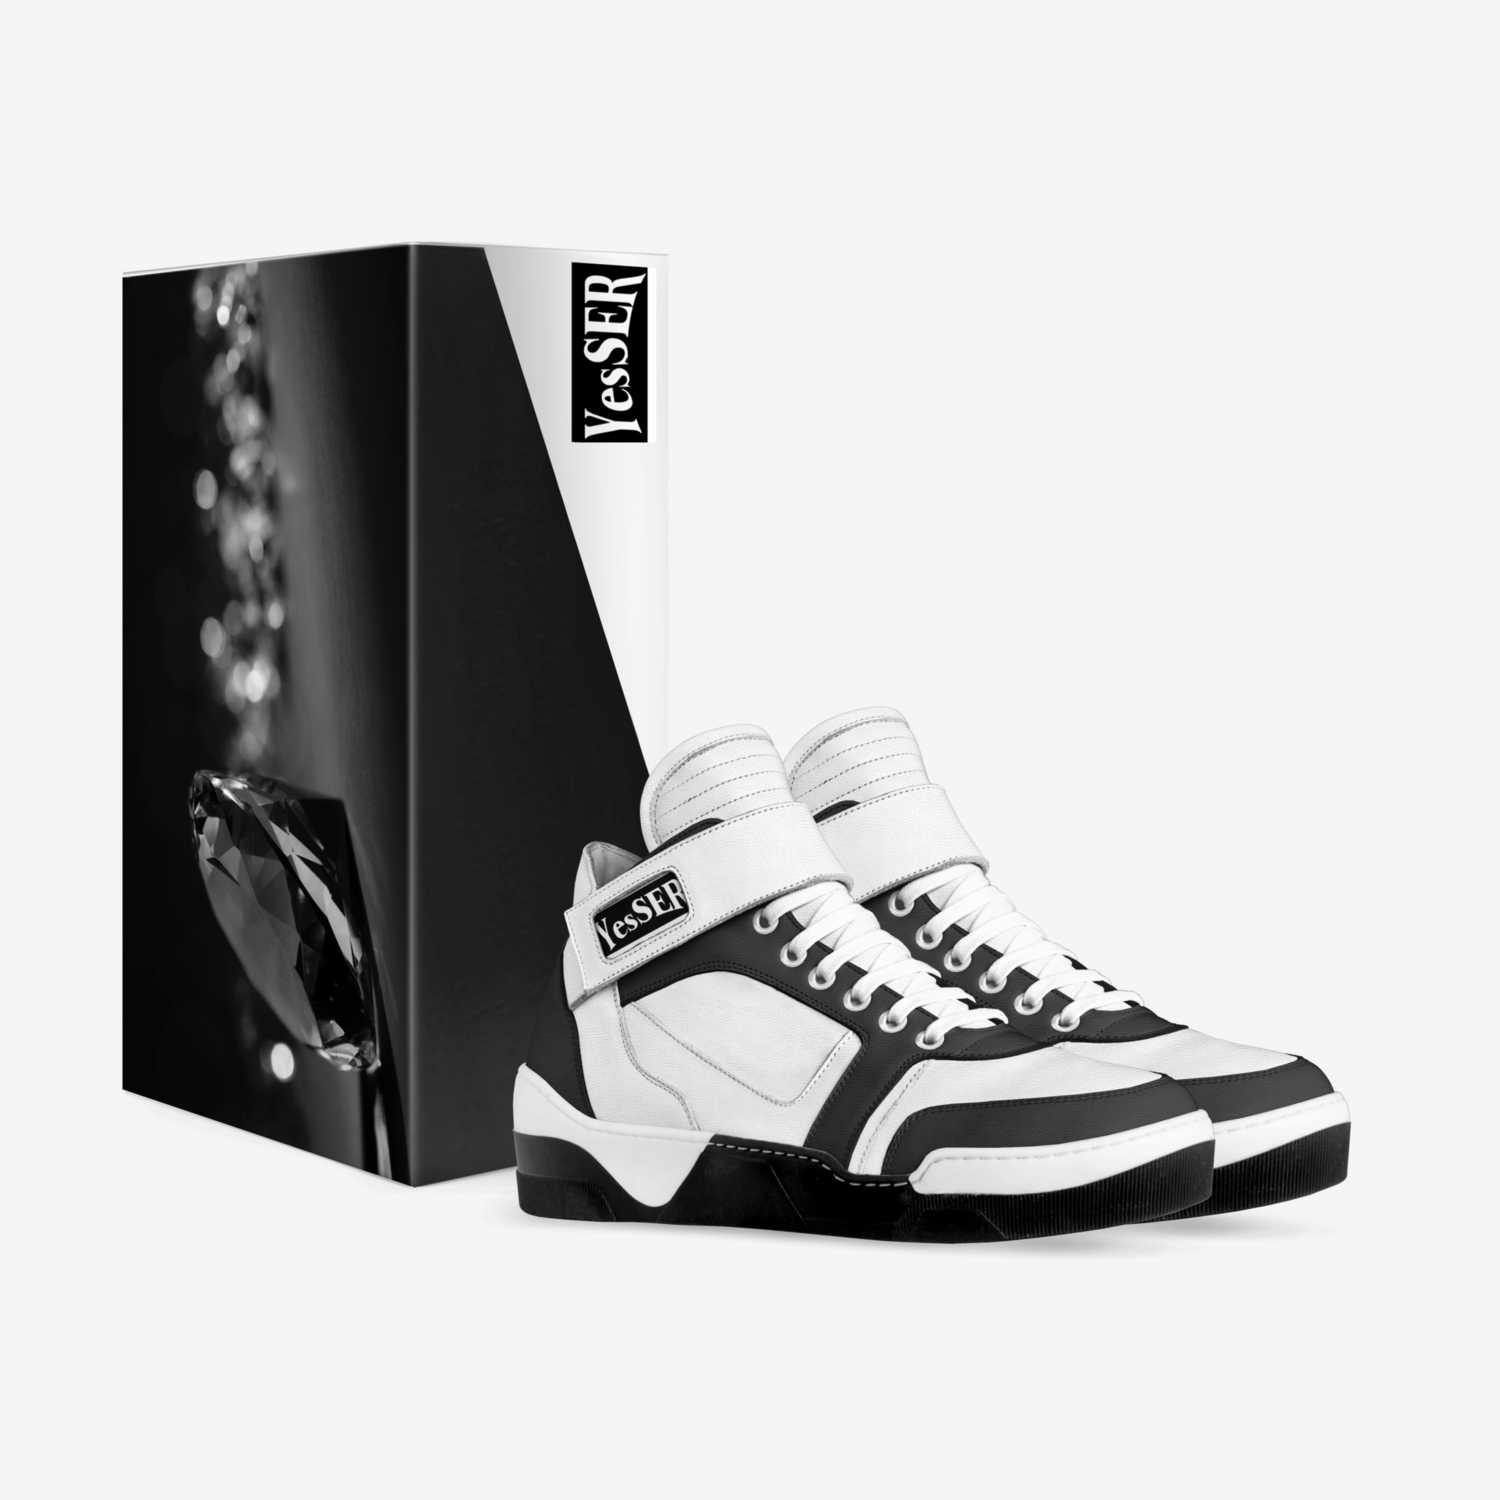 SERnationz V2 custom made in Italy shoes by Dustin Rhynes | Box view